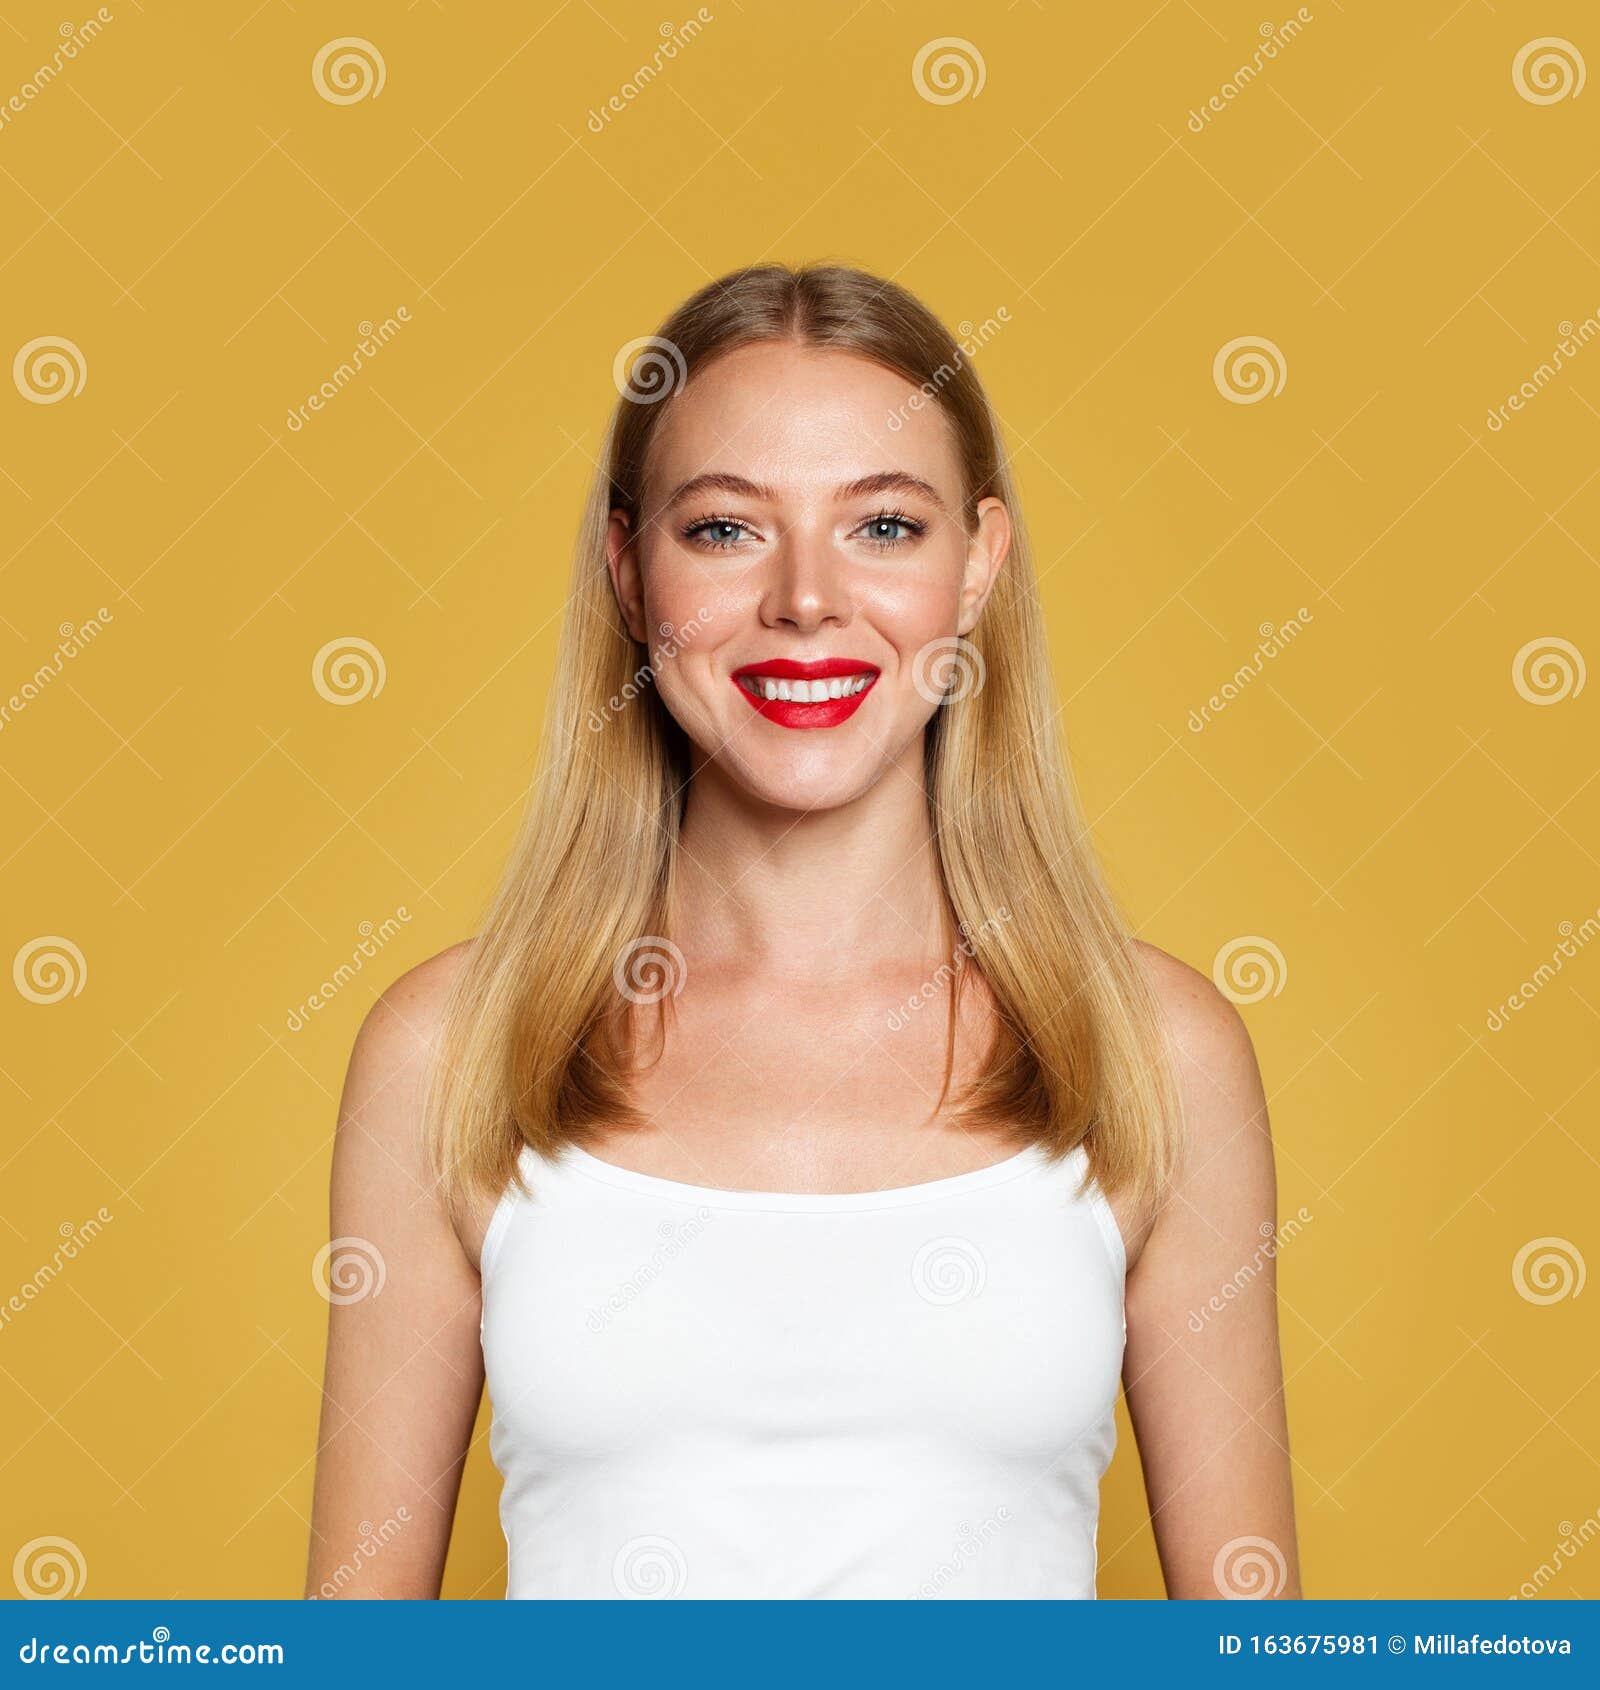 nice positive woman on yellow background. portrait, positive emotion